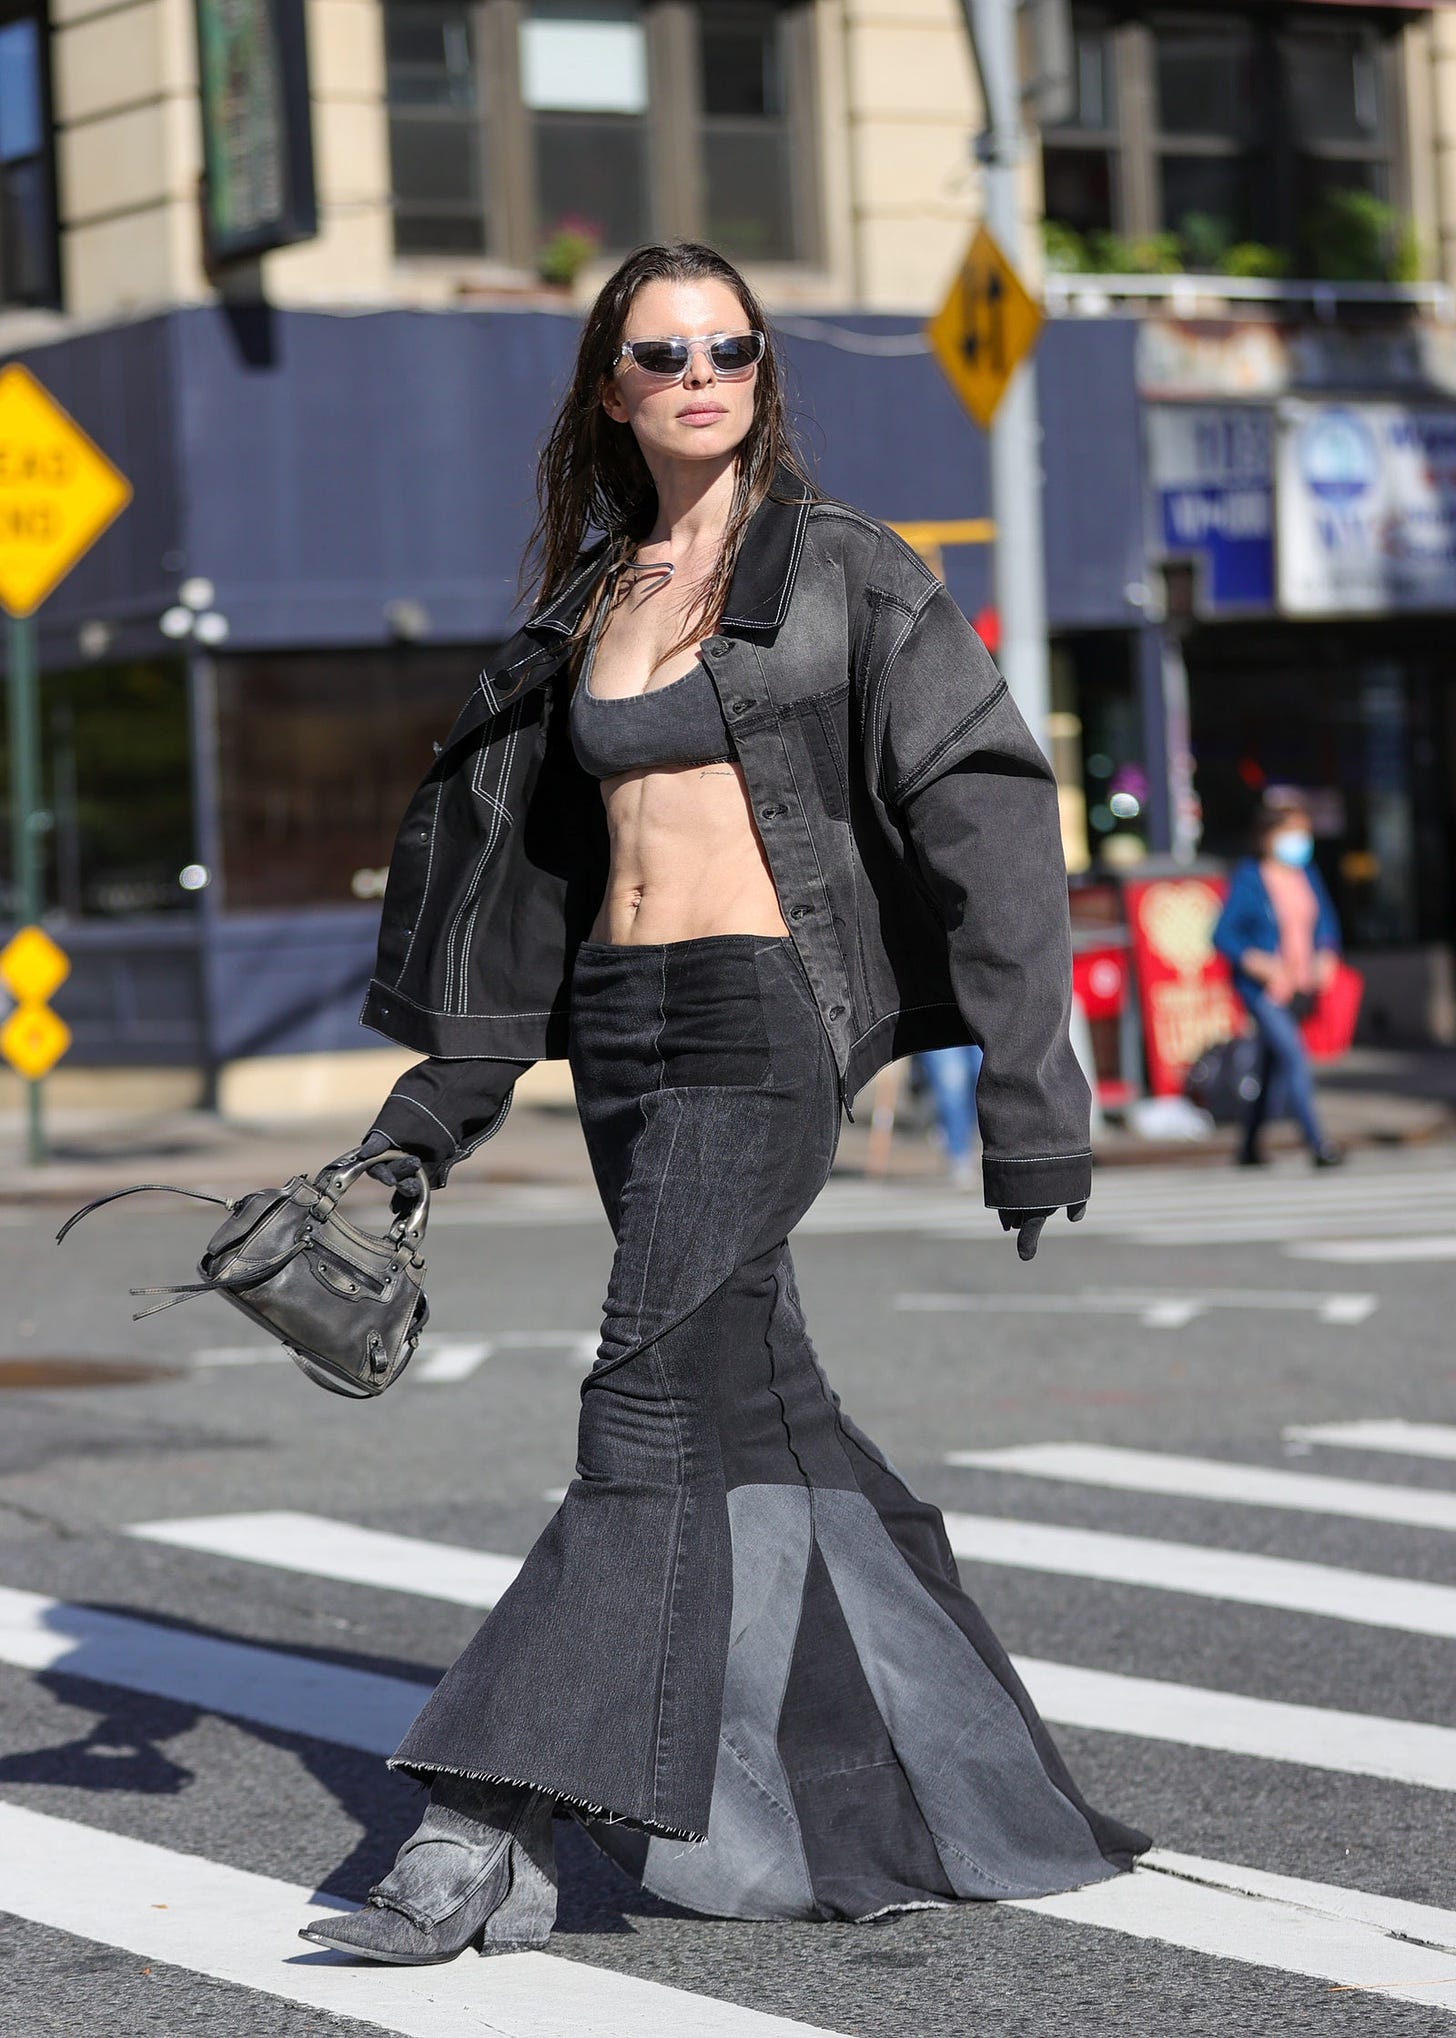 Julia Fox wears an all black denim outfit in New York.